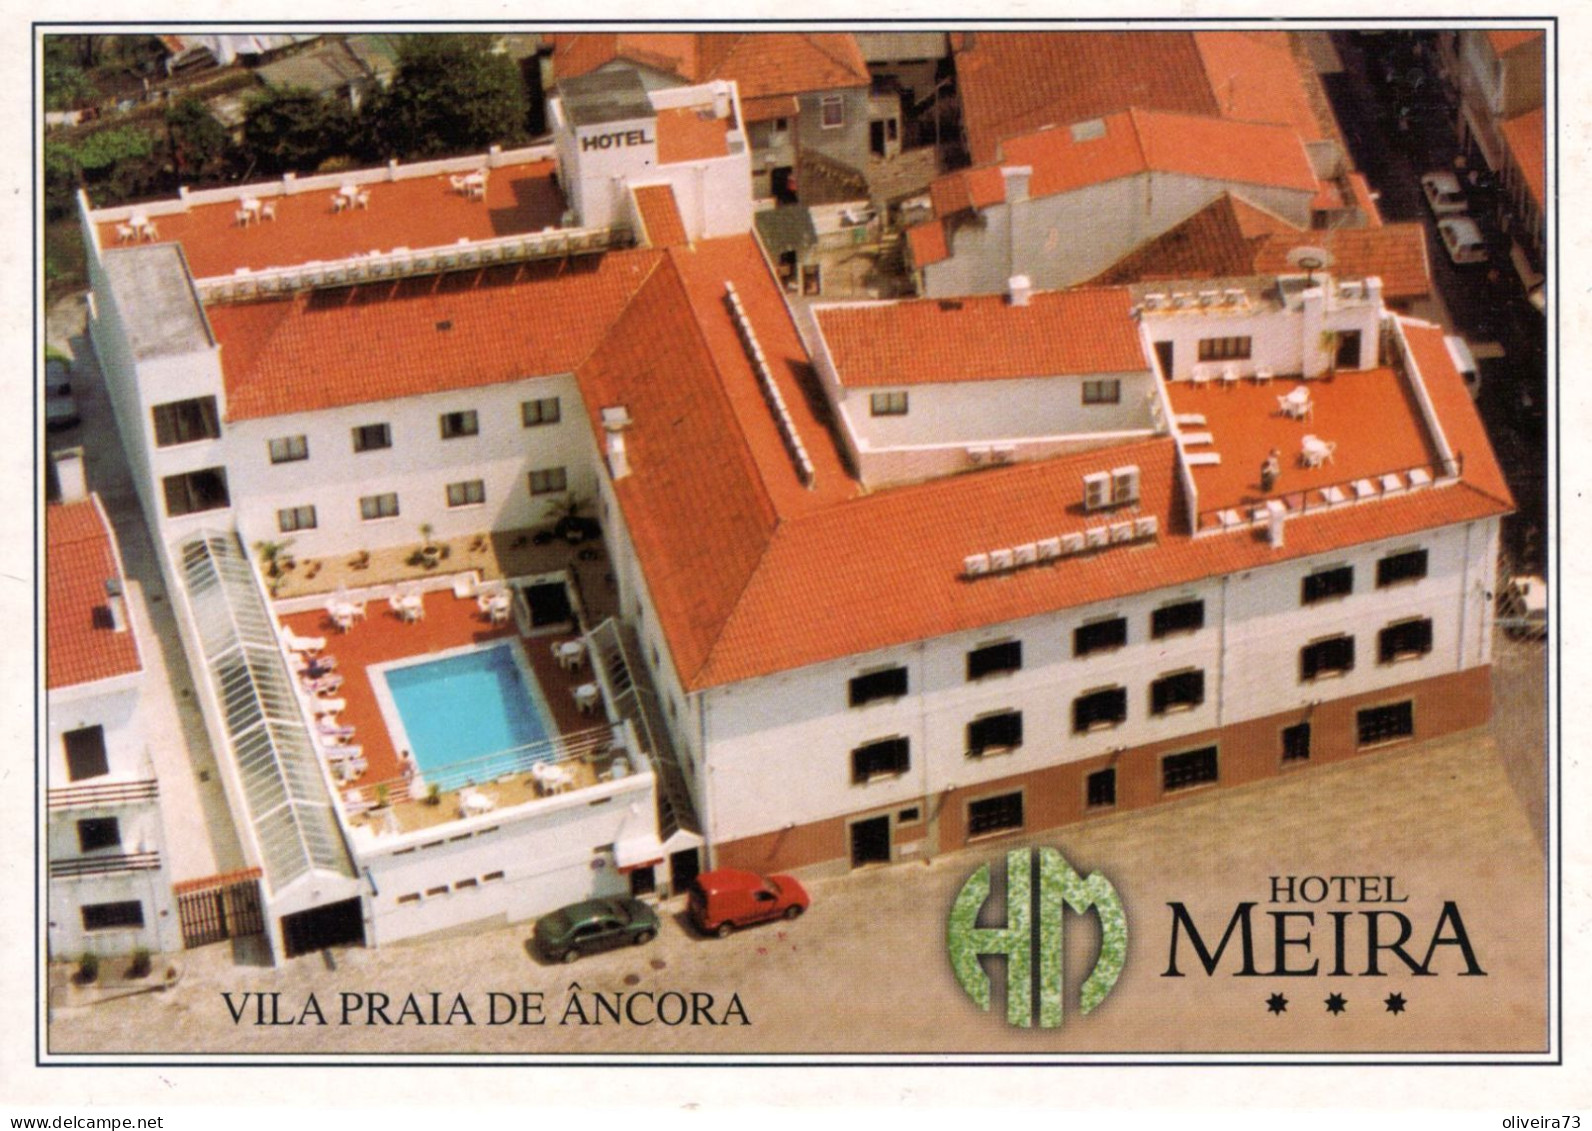 VILA PRAIA DE ANCORA - Hotel MEIRA - PORTUGAL - Viana Do Castelo